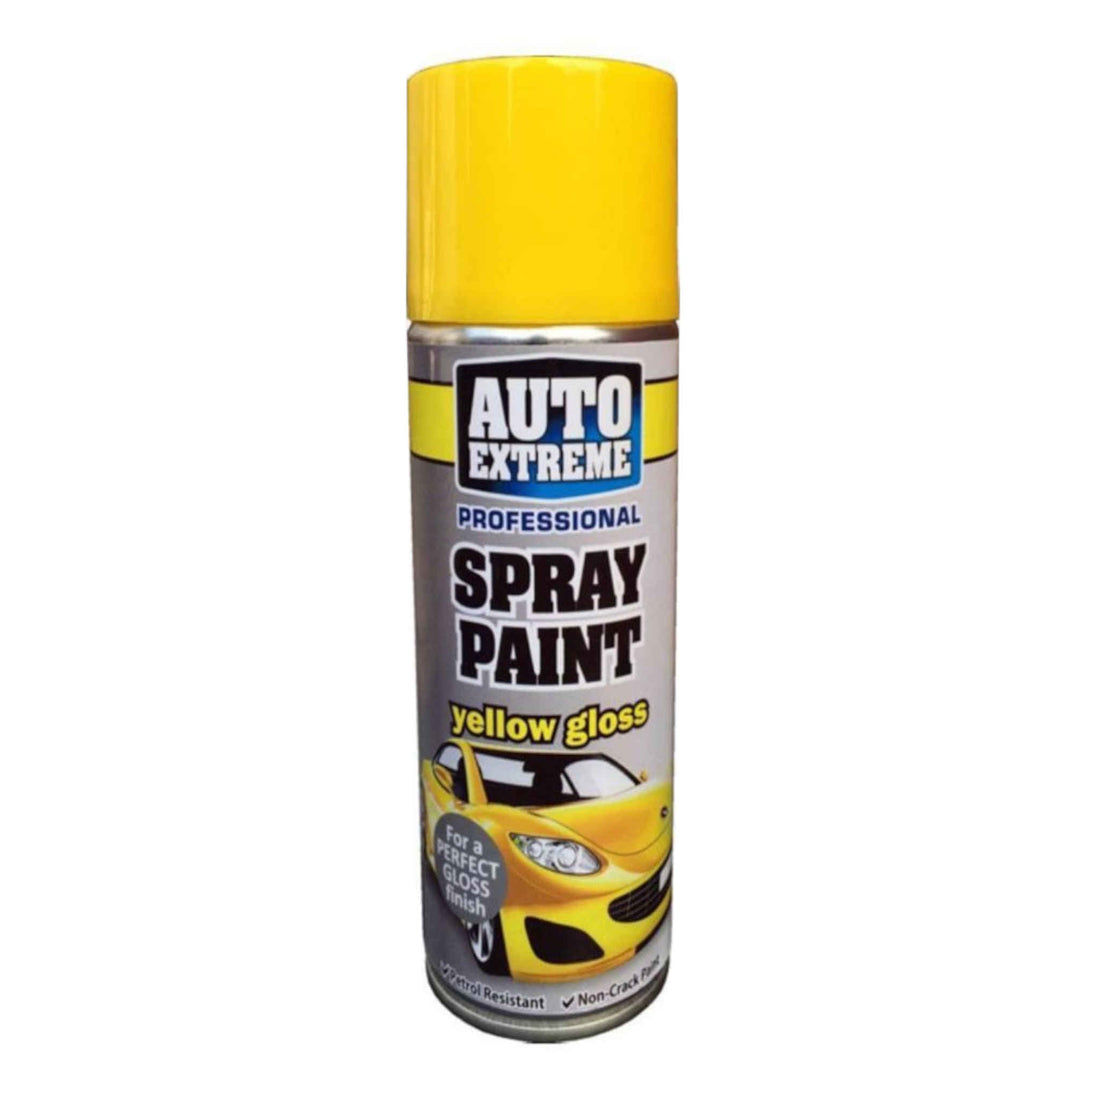 Auto Extreme Spray Paint | Yellow Gloss | 400ml